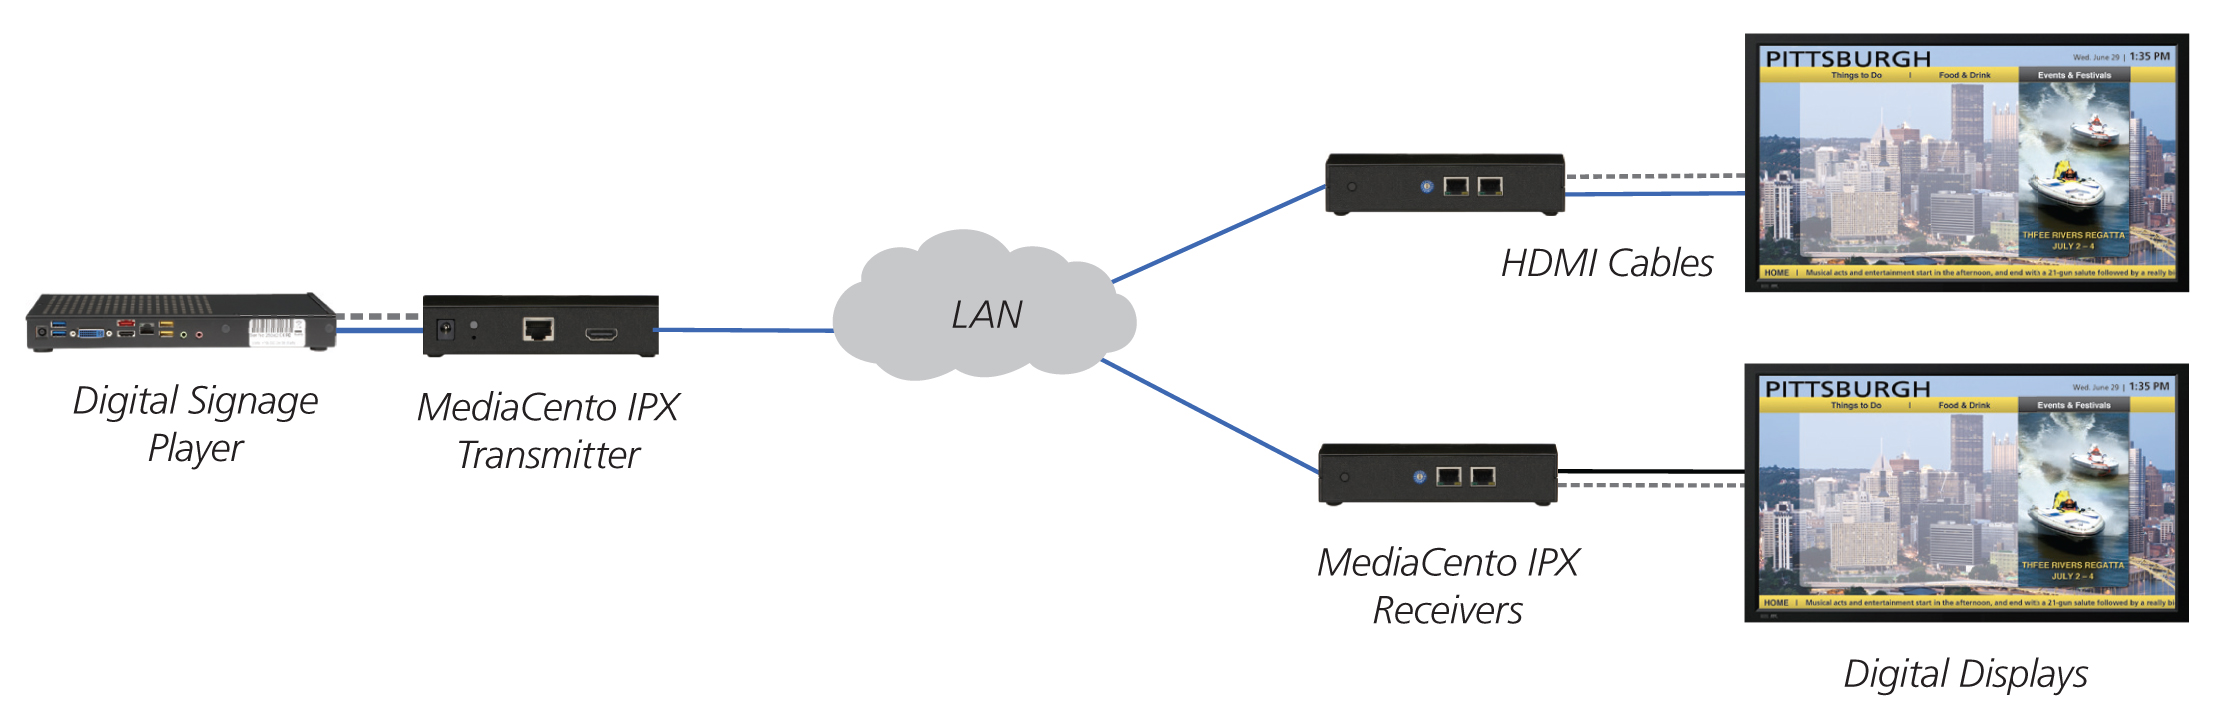 MediaCento Multicast Configuration